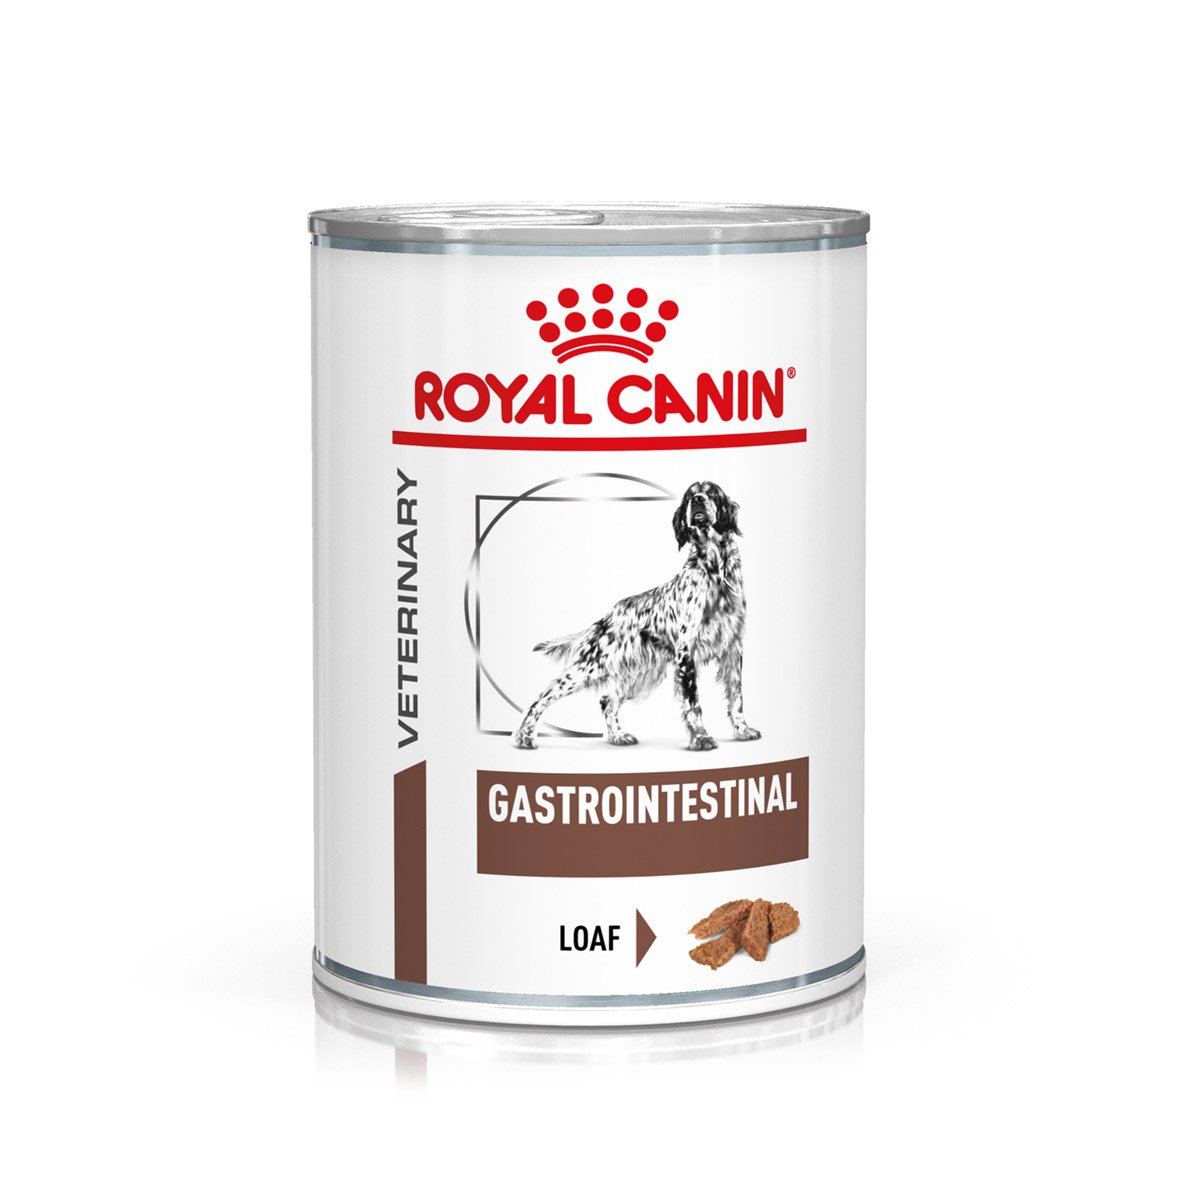 ROYAL CANIN® Veterinary GASTROINTESTINAL Mousse Nassfutter für Hunde 12x400g von Royal Canin